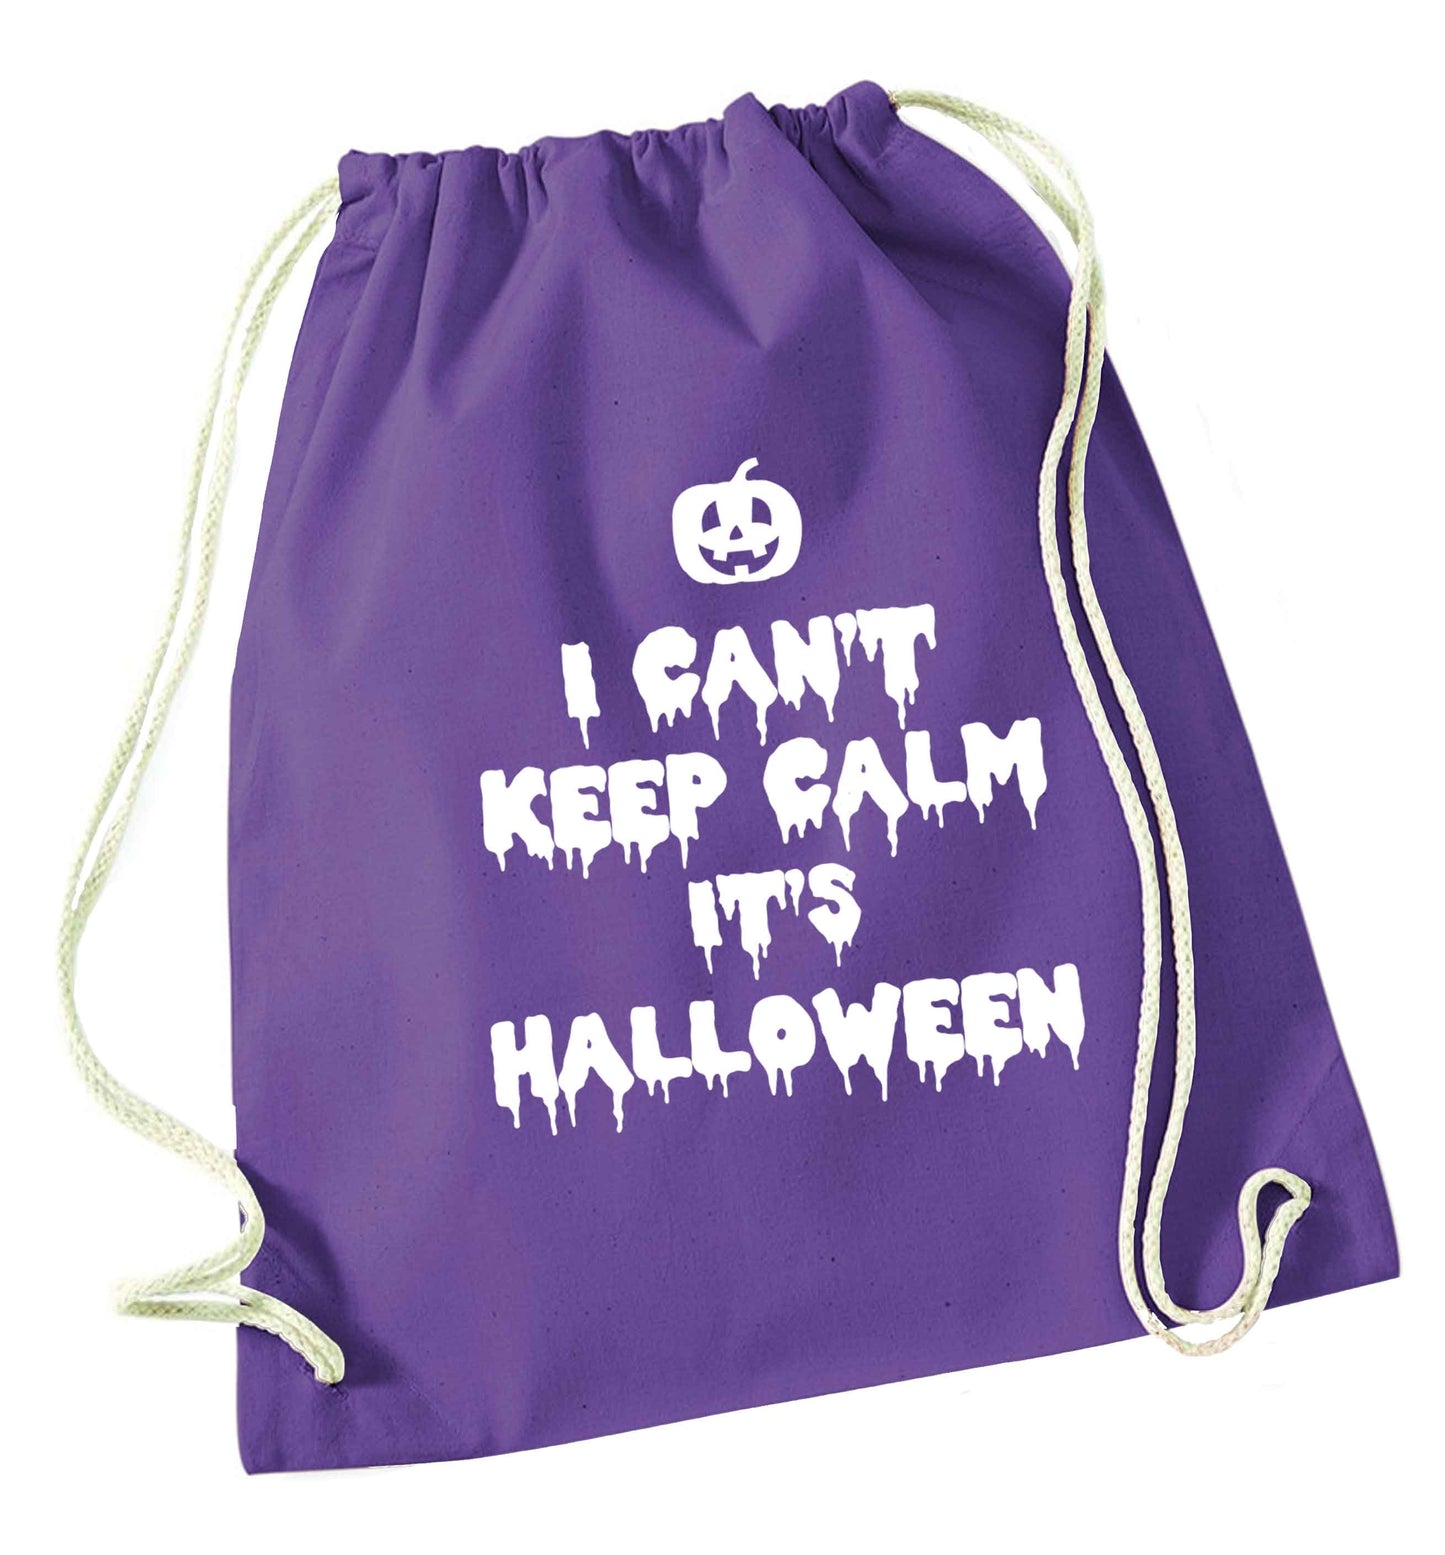 I can't keep calm it's halloween purple drawstring bag